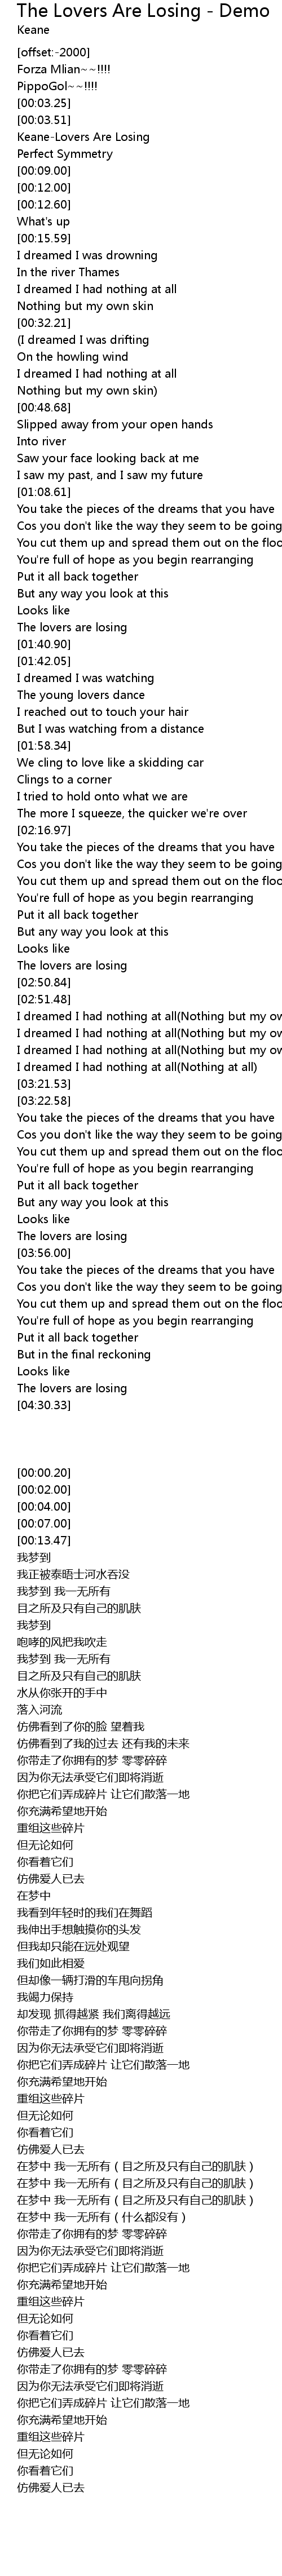 The Lovers Are Losing - Demo Lyrics